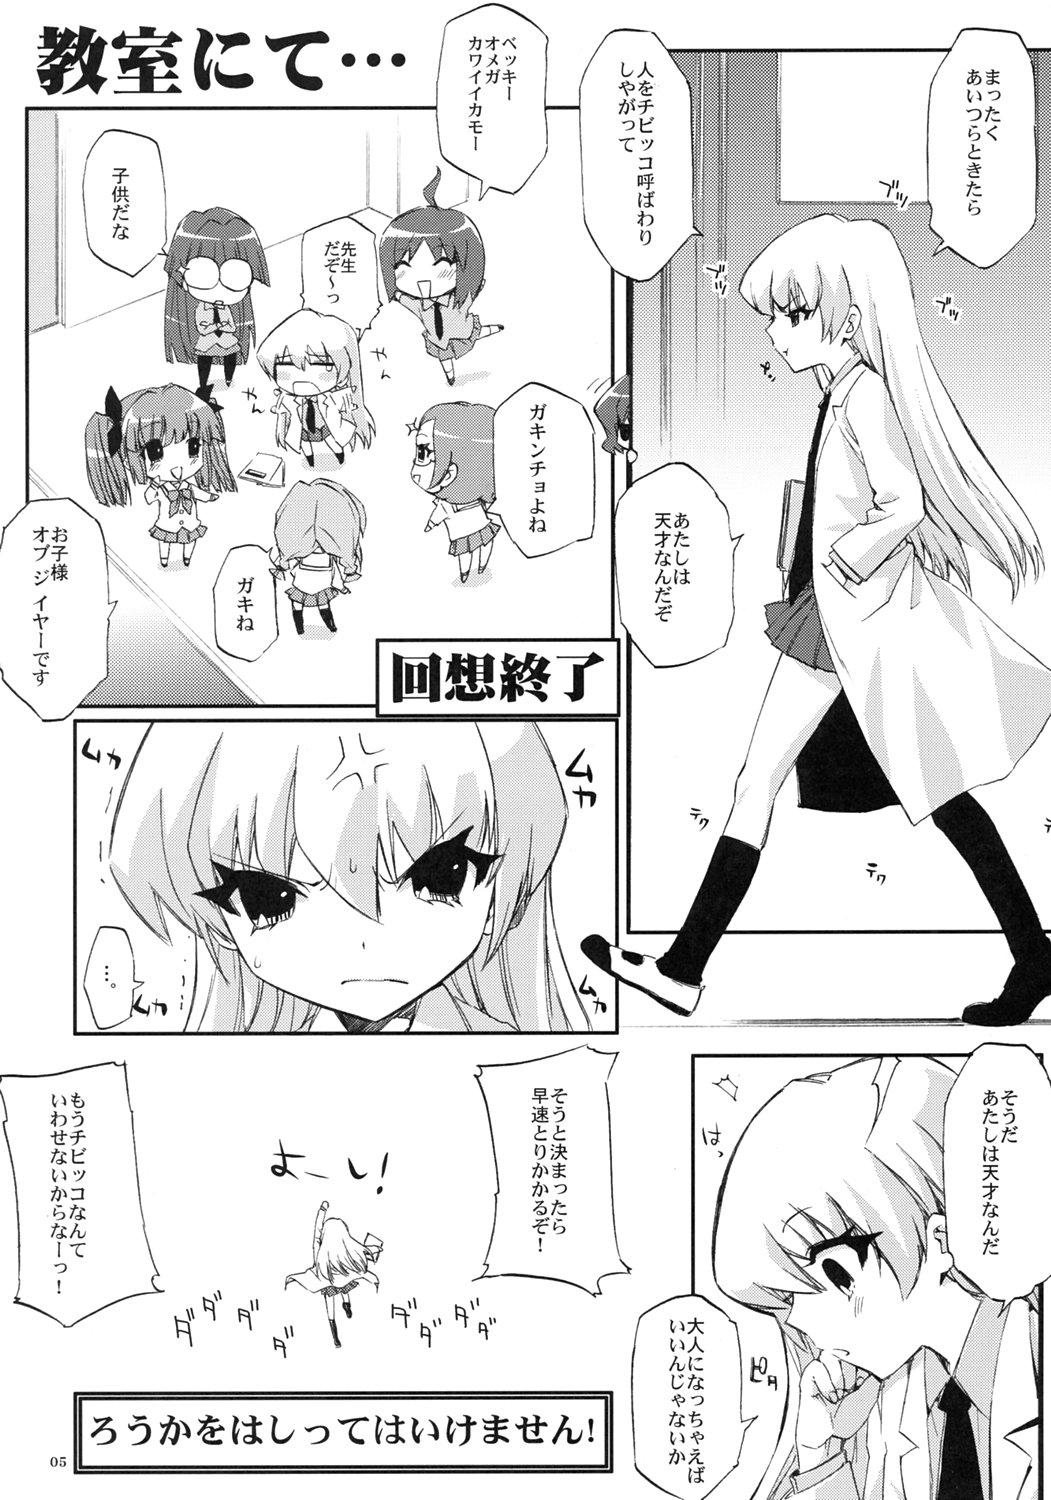 Chubby Tensai to Shikenkan to Hakui to Aoi Kami no Eroi Hon - Pani poni dash Sextape - Page 4